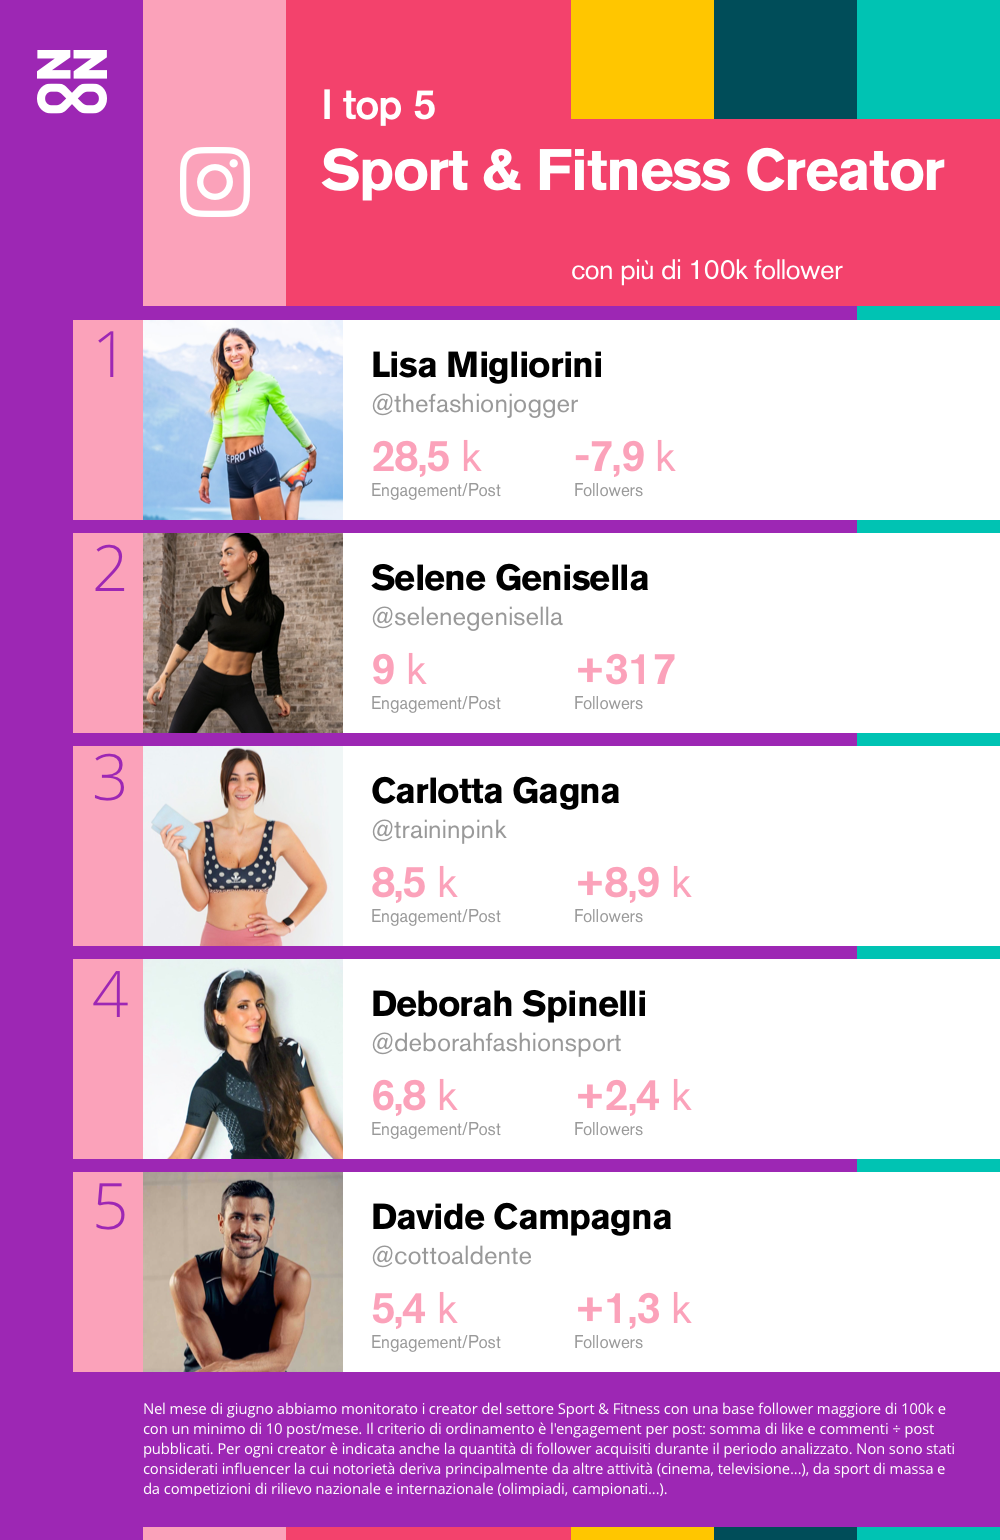 Classifica dei Top Sport e Fitness influencer italiani su Instagram:
1) @thefashionjogger
2) @selenegenisella
3) @traininpink
4) @deborahfashionsport
5) @cottoaldente